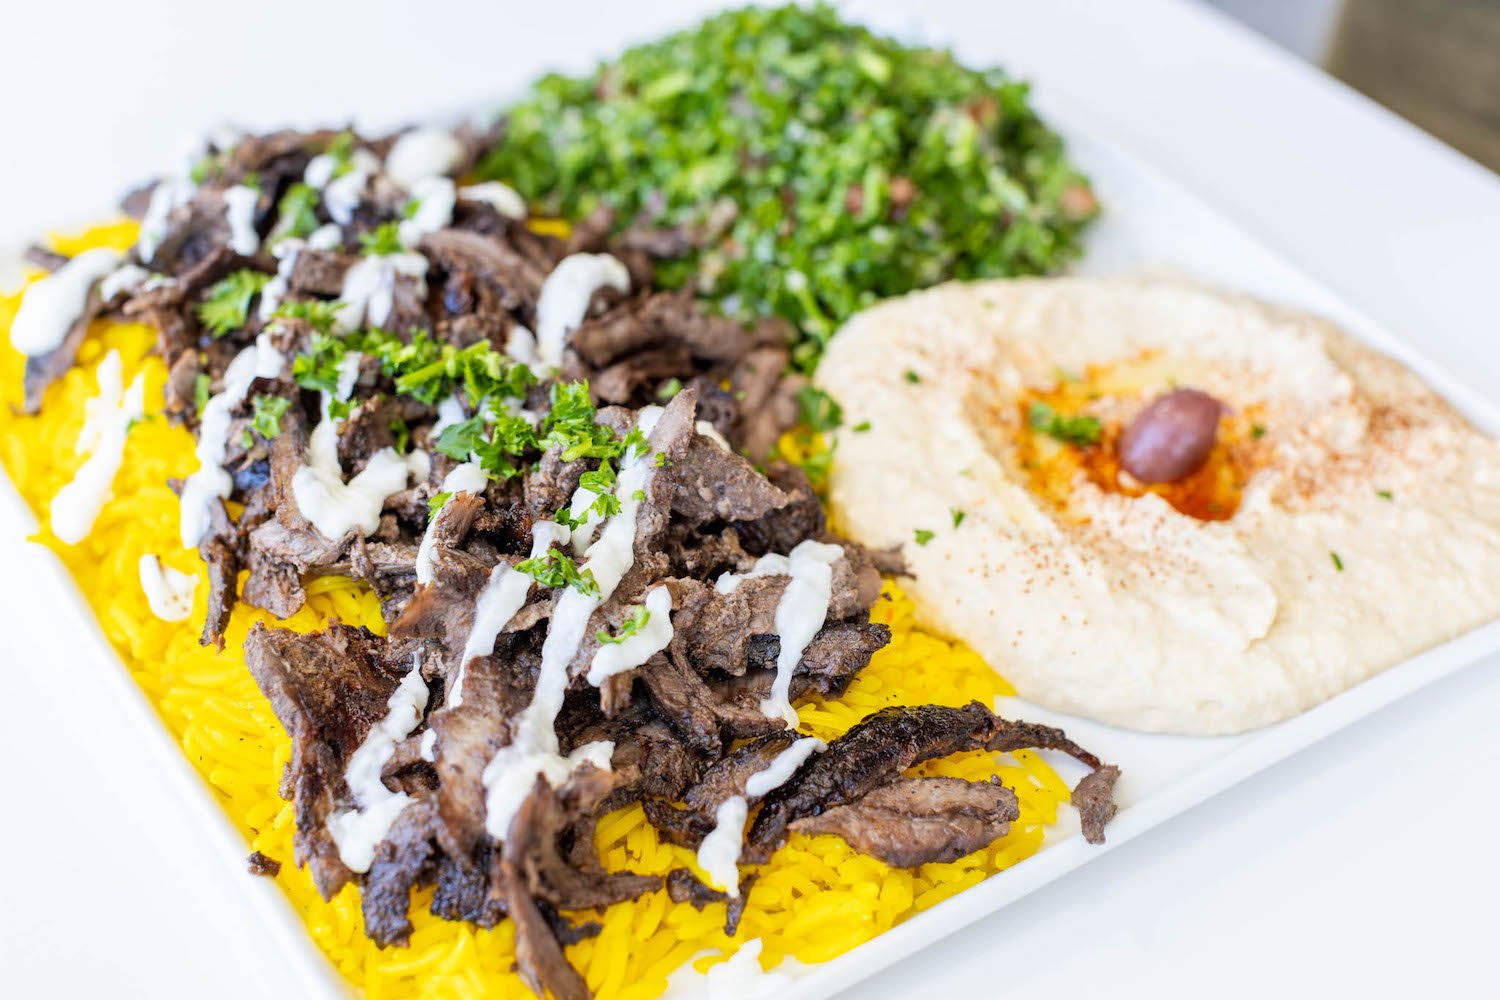 Shawarma Guys San Diego mediterranean restaurant and food truck opening a new brick-and-mortar location in Mira Mesa